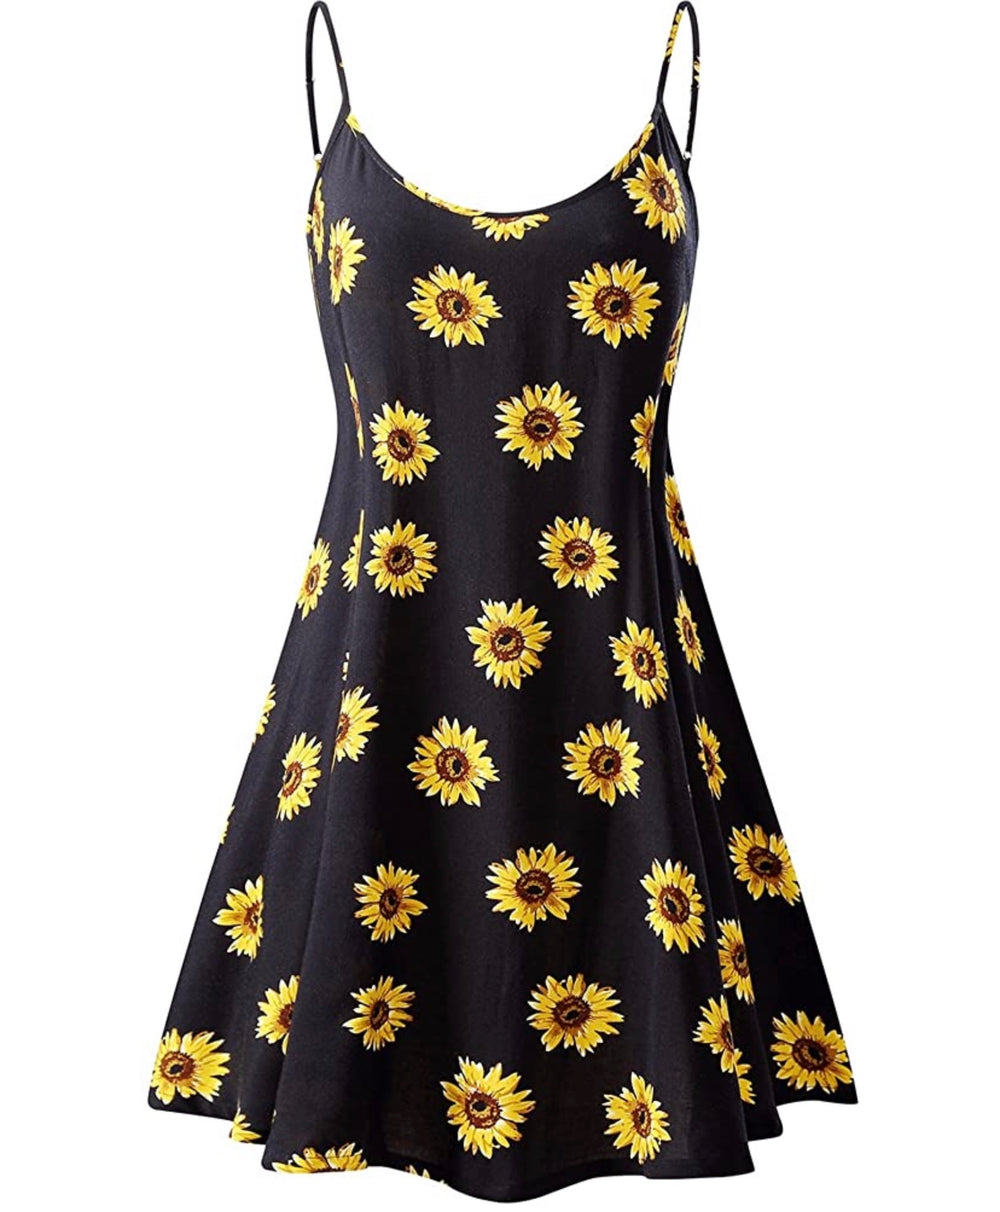 Sunflower Sundress (Black) – Pivot Farm